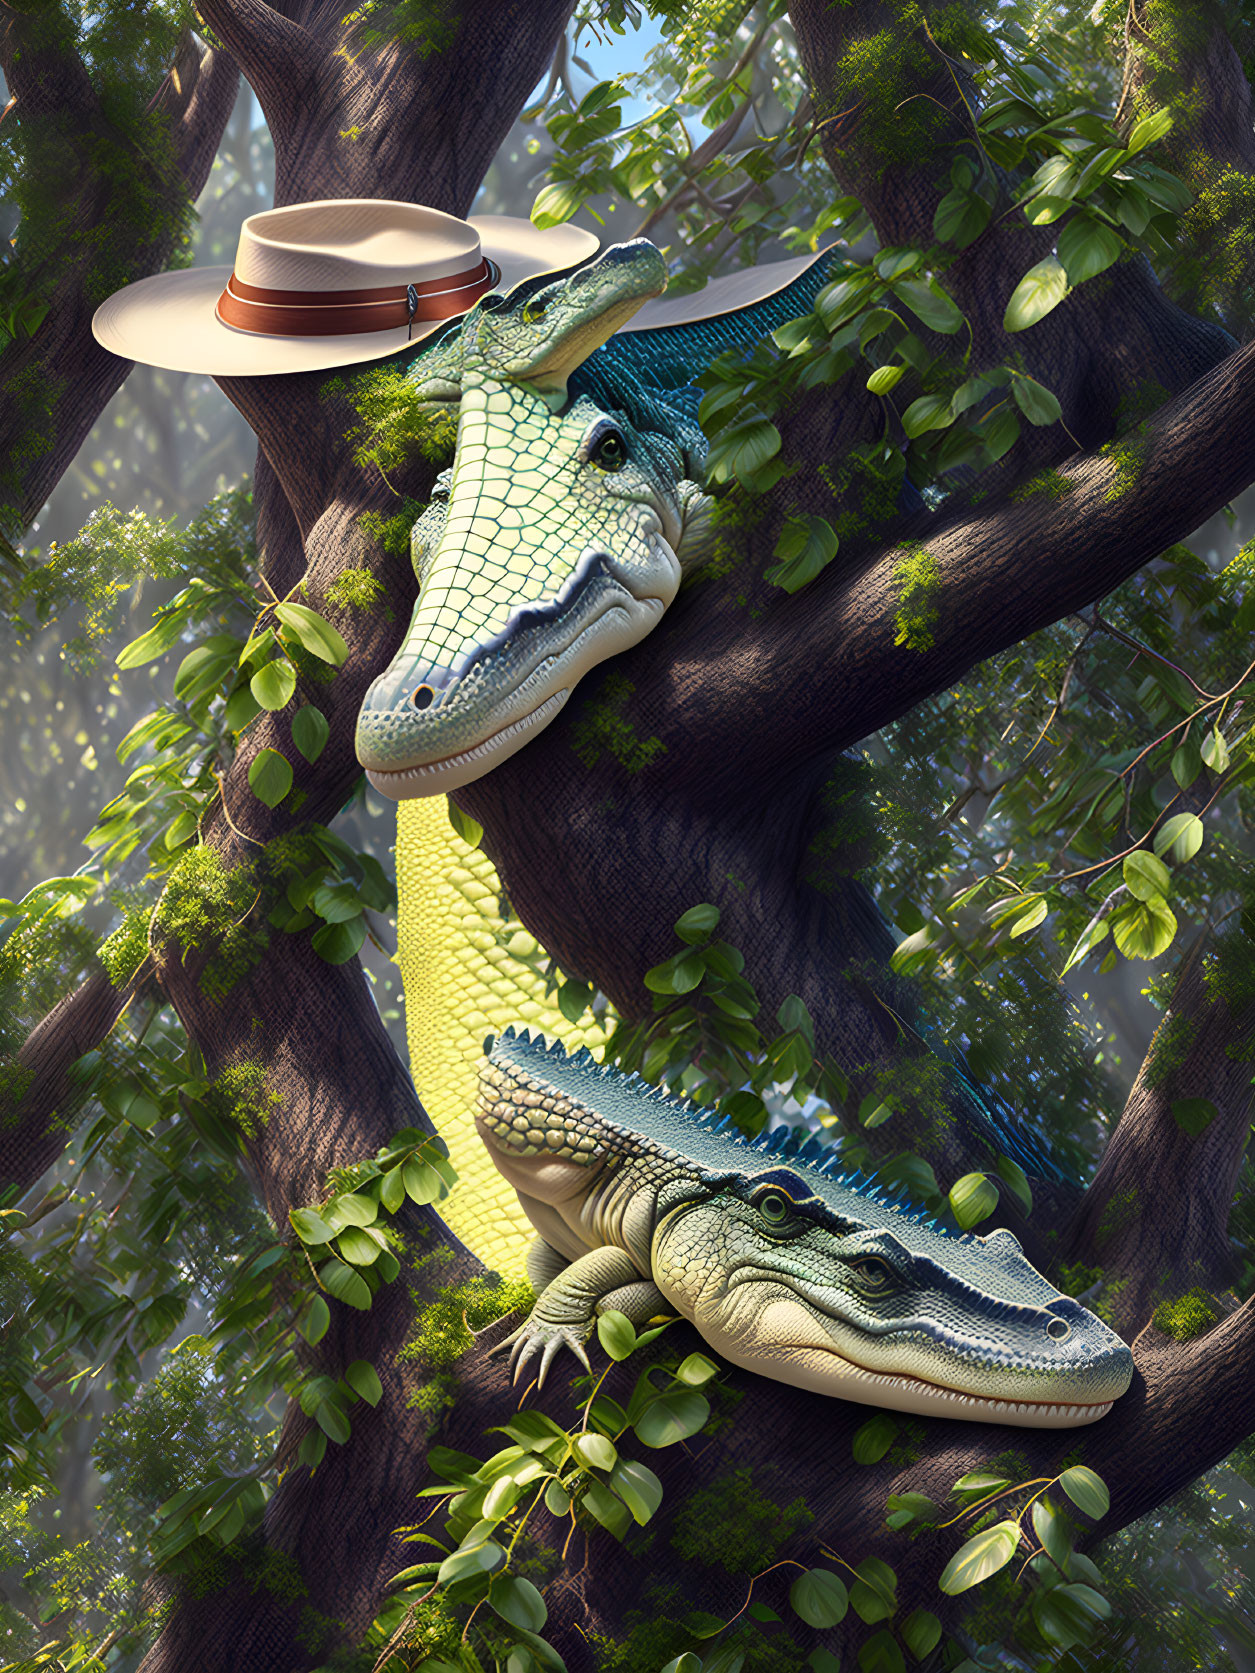 Anthropomorphic alligators in hats resting in forest scene